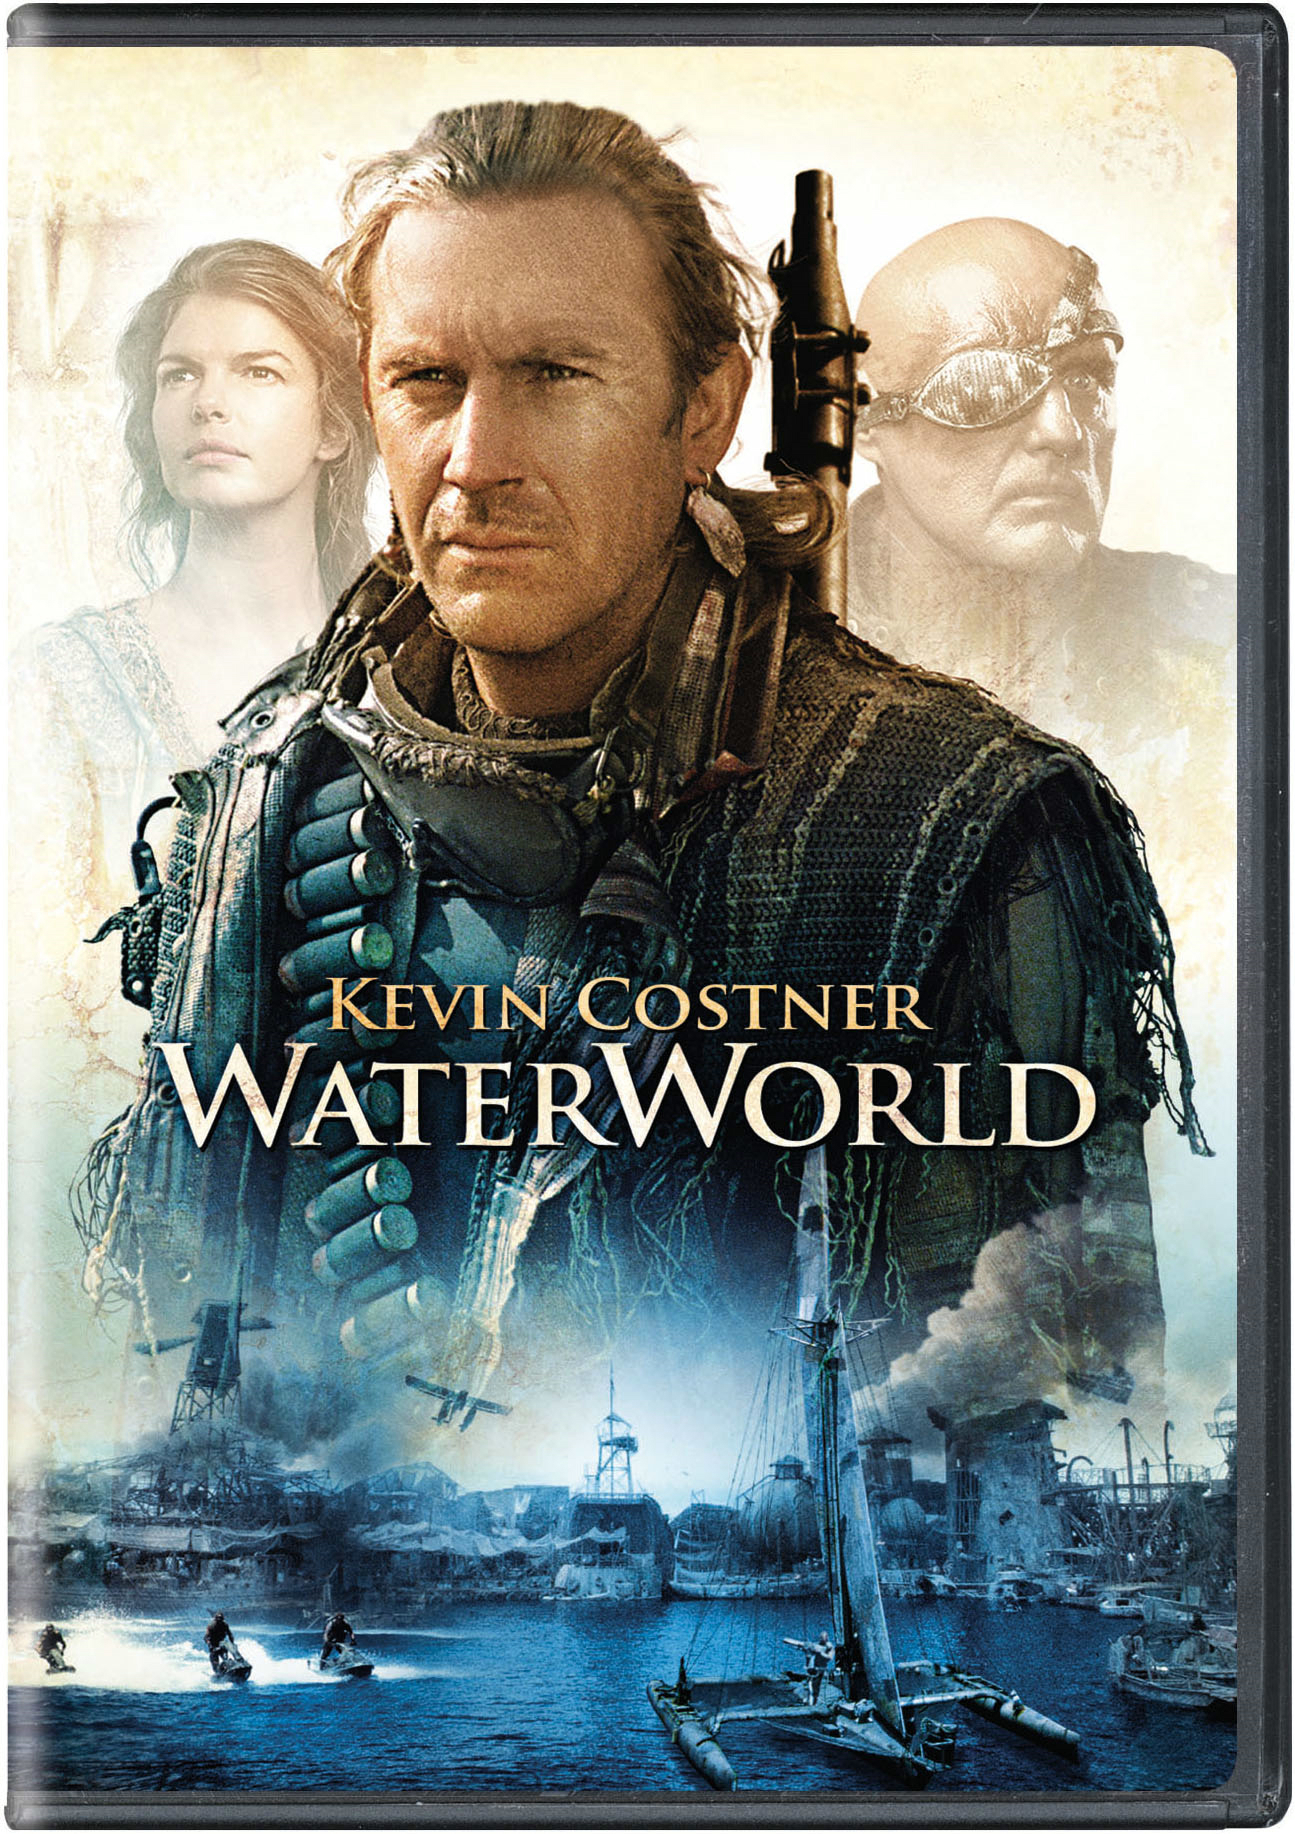 Waterworld - DVD [ 1995 ]  - Adventure Movies On DVD - Movies On GRUV